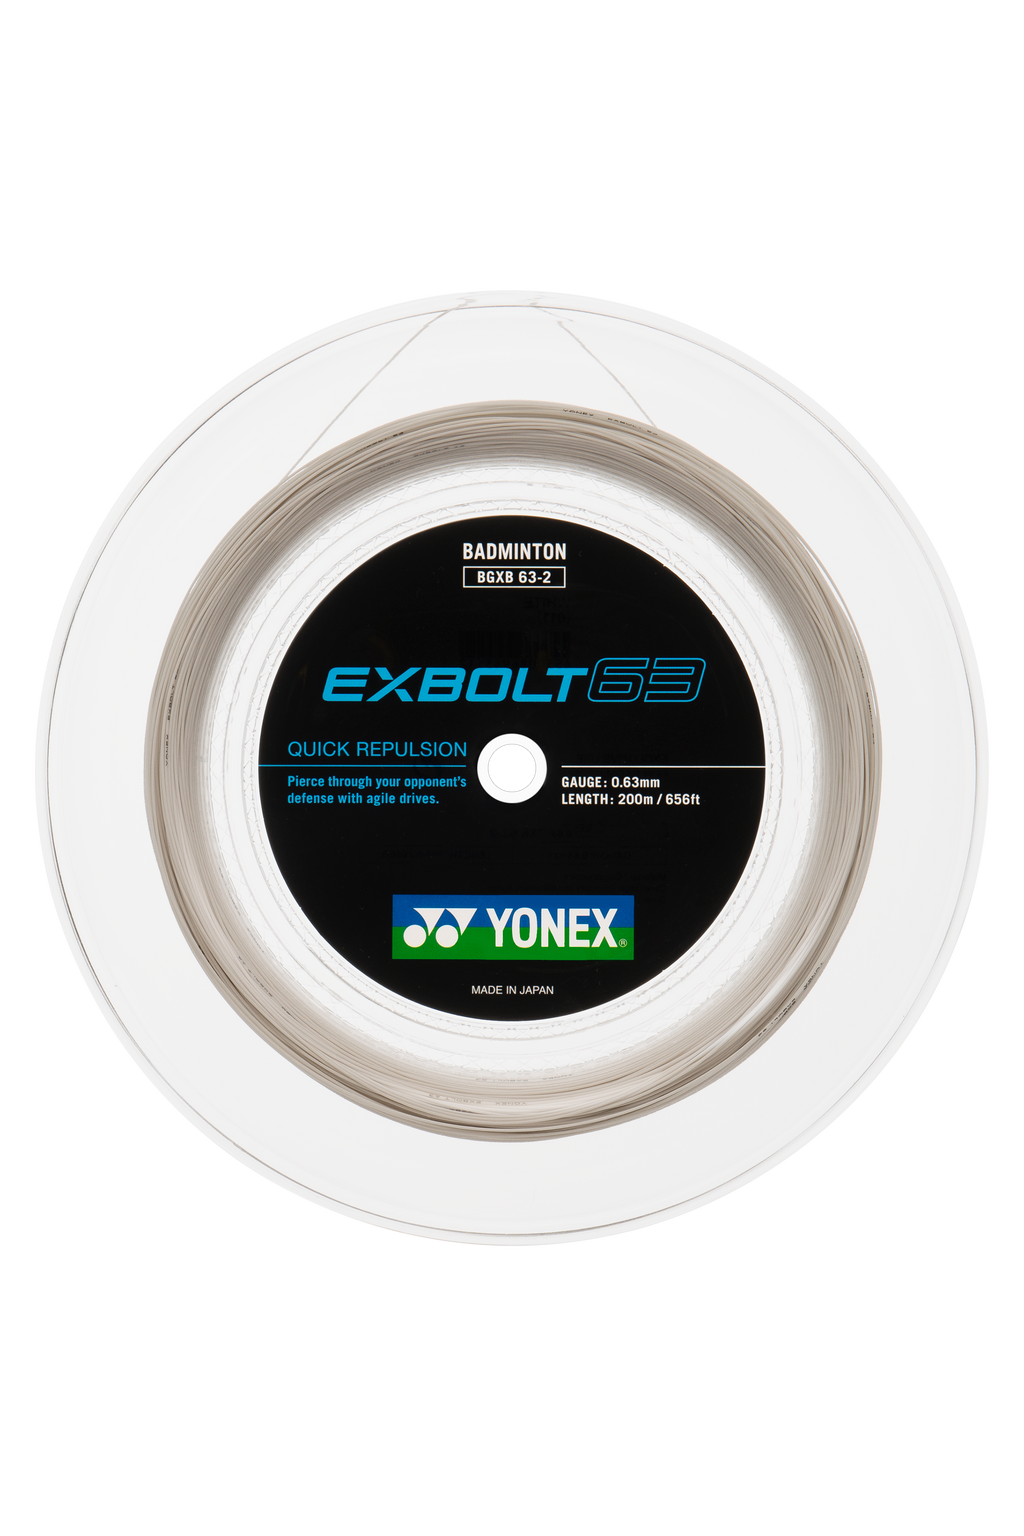 Yonex Exbolt 63 Badminton String [200m Reel]